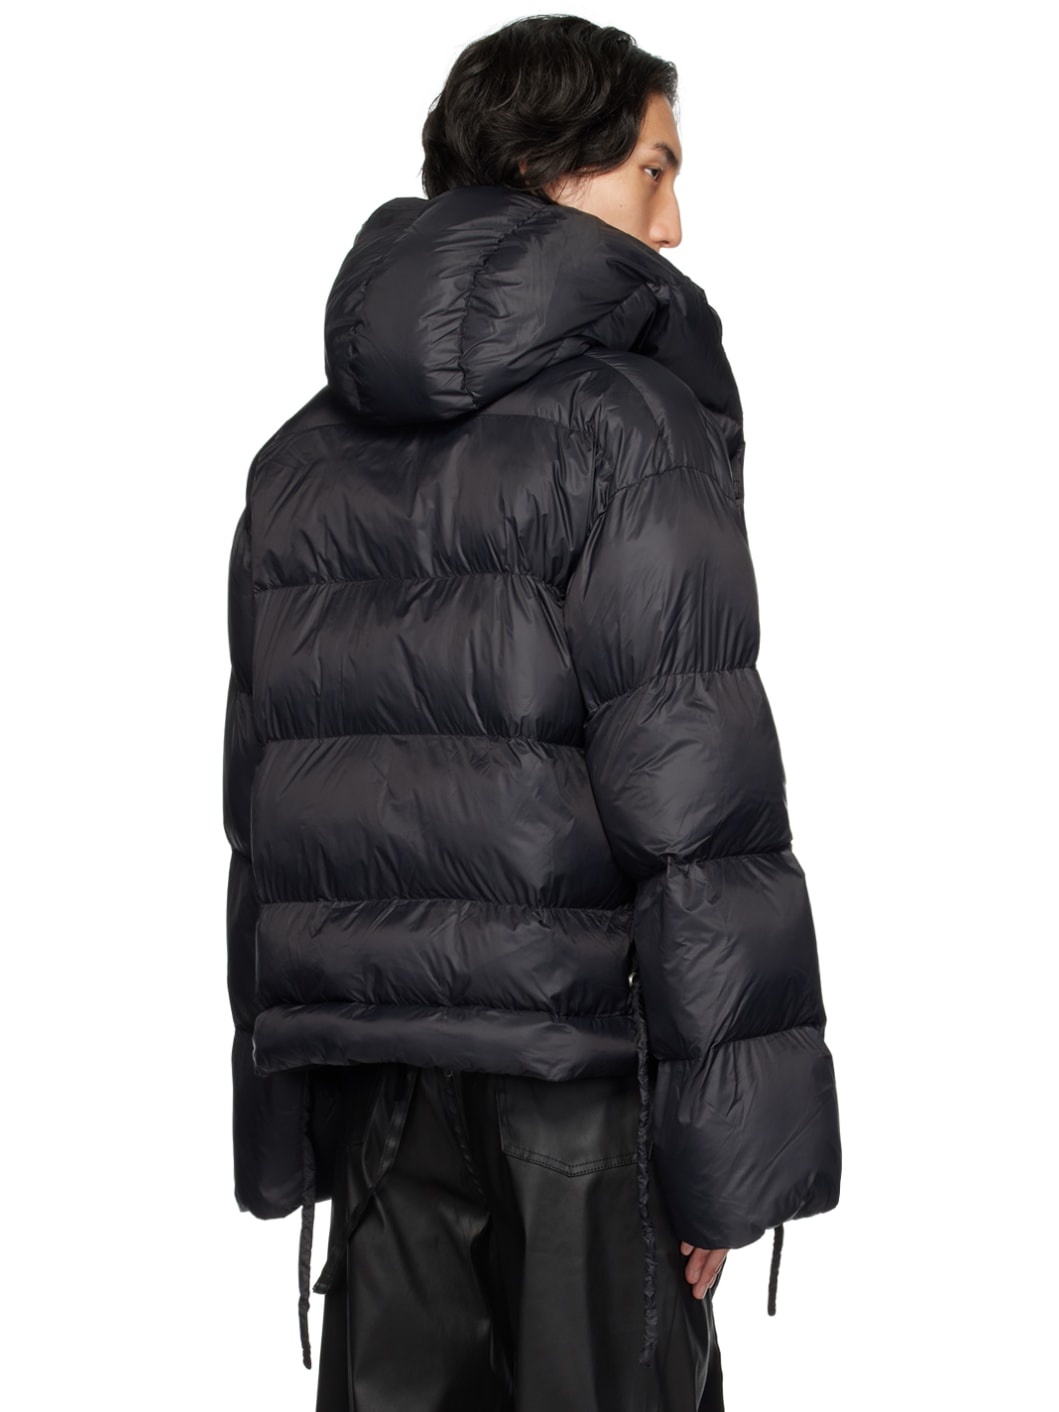 Black Hooded Puffer Jacket - 3